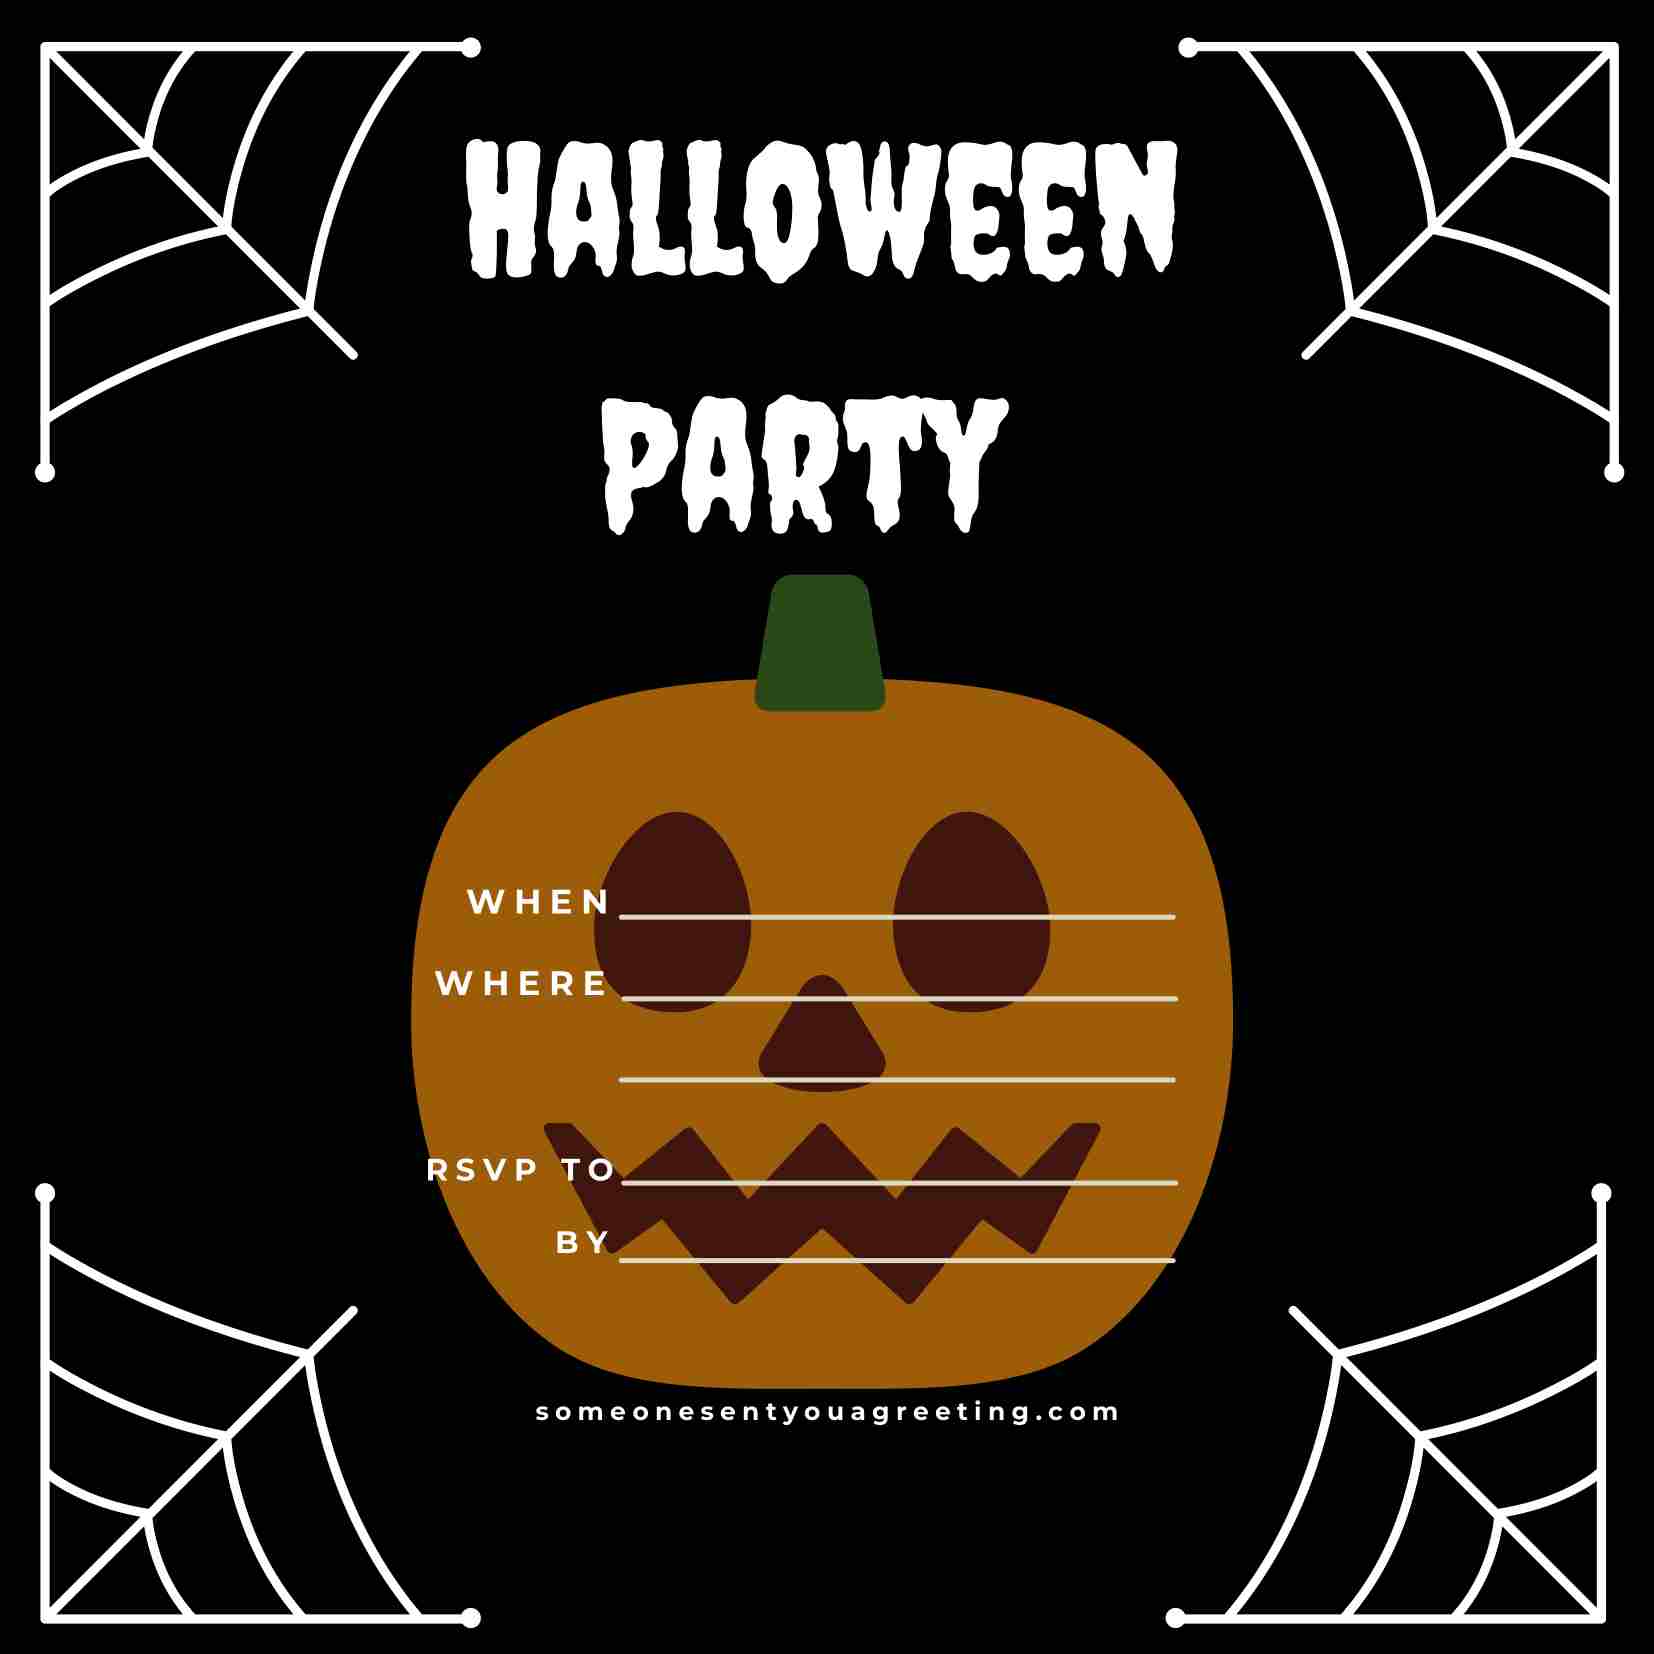 Sample Halloween Party Invitation